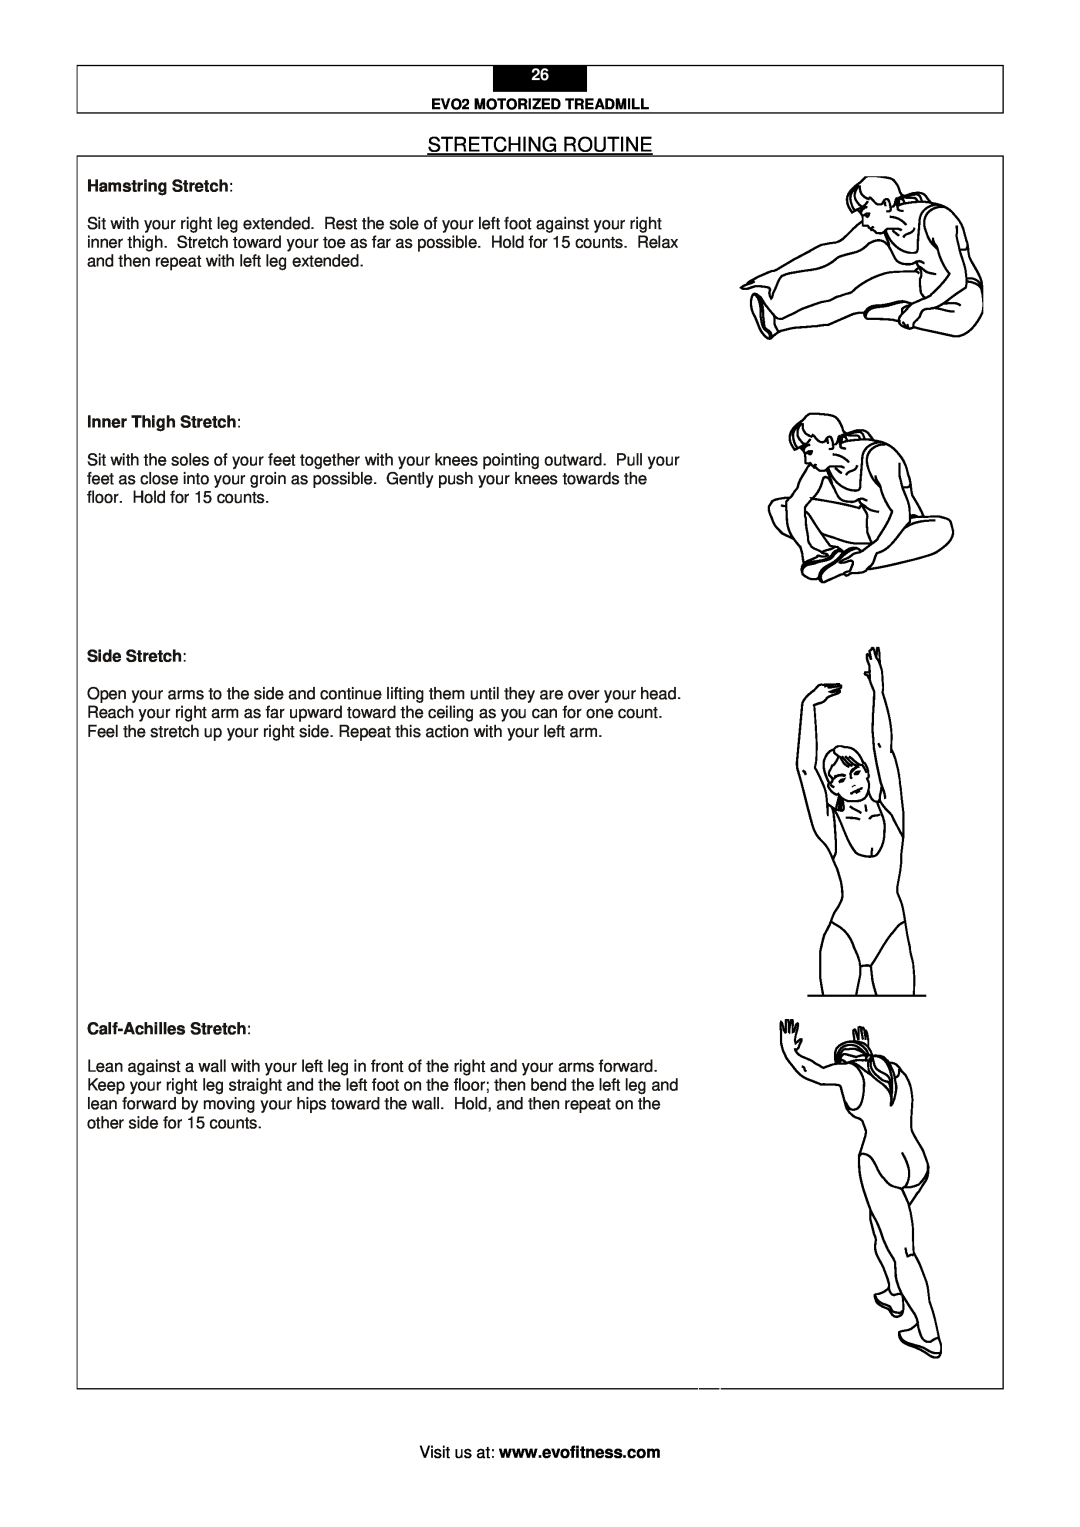 Evo Fitness EVO2 Hamstring Stretch, Inner Thigh Stretch, Side Stretch, Calf-Achilles Stretch, Stretching Routine 